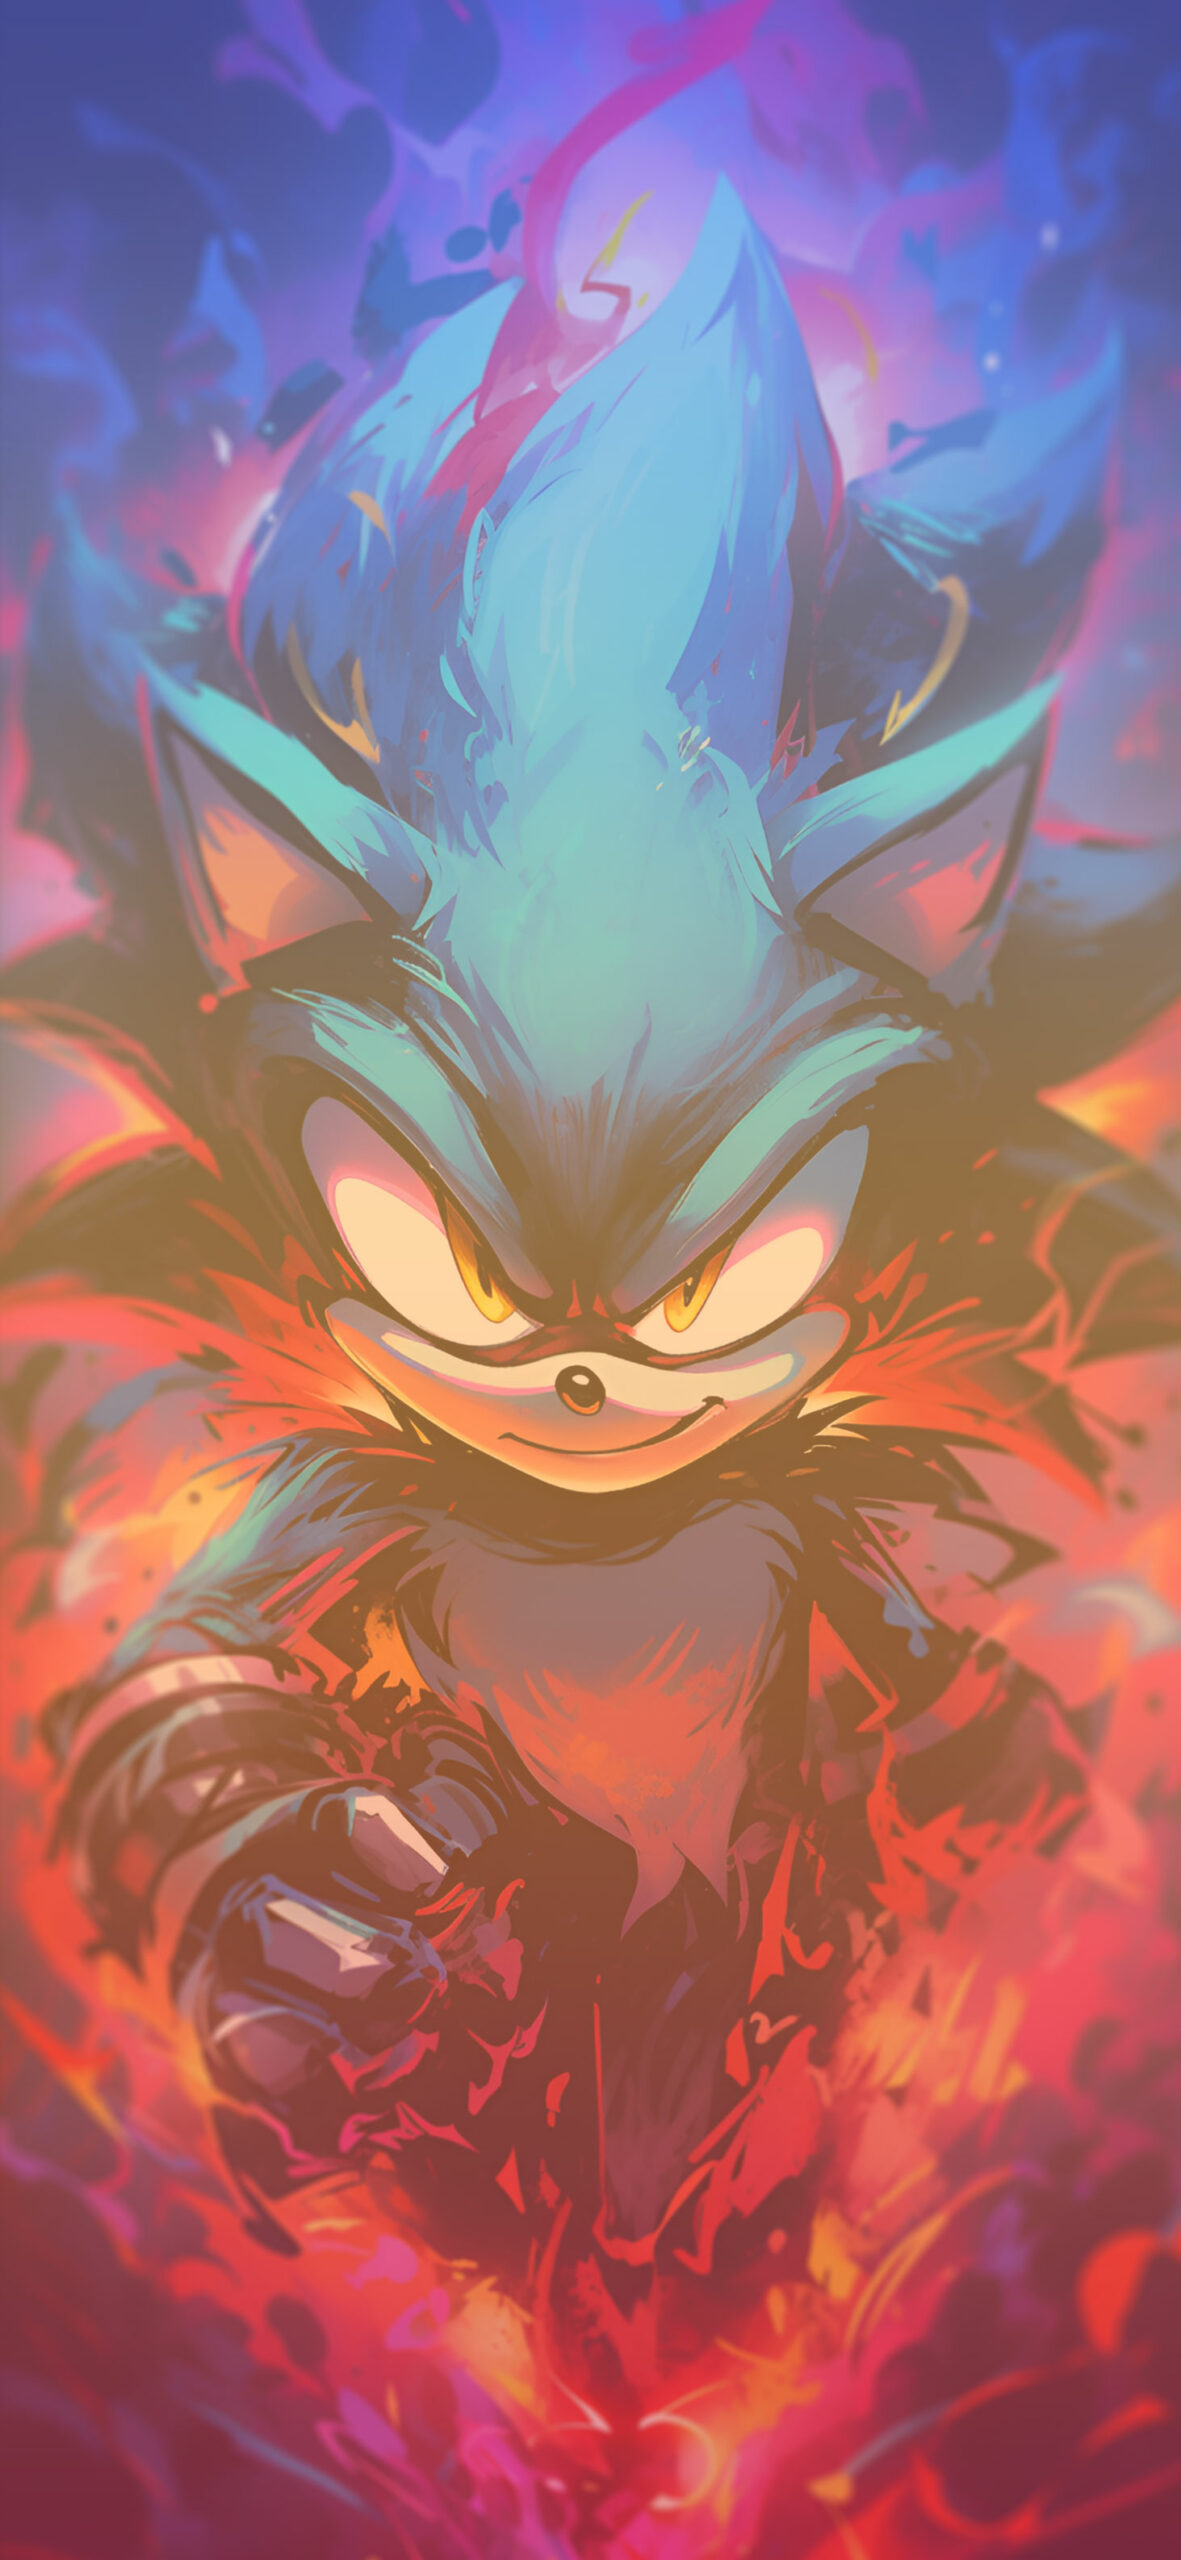 Sonic the Hedgehog Colorful Art Wallpaper Sonic Wallpaper for